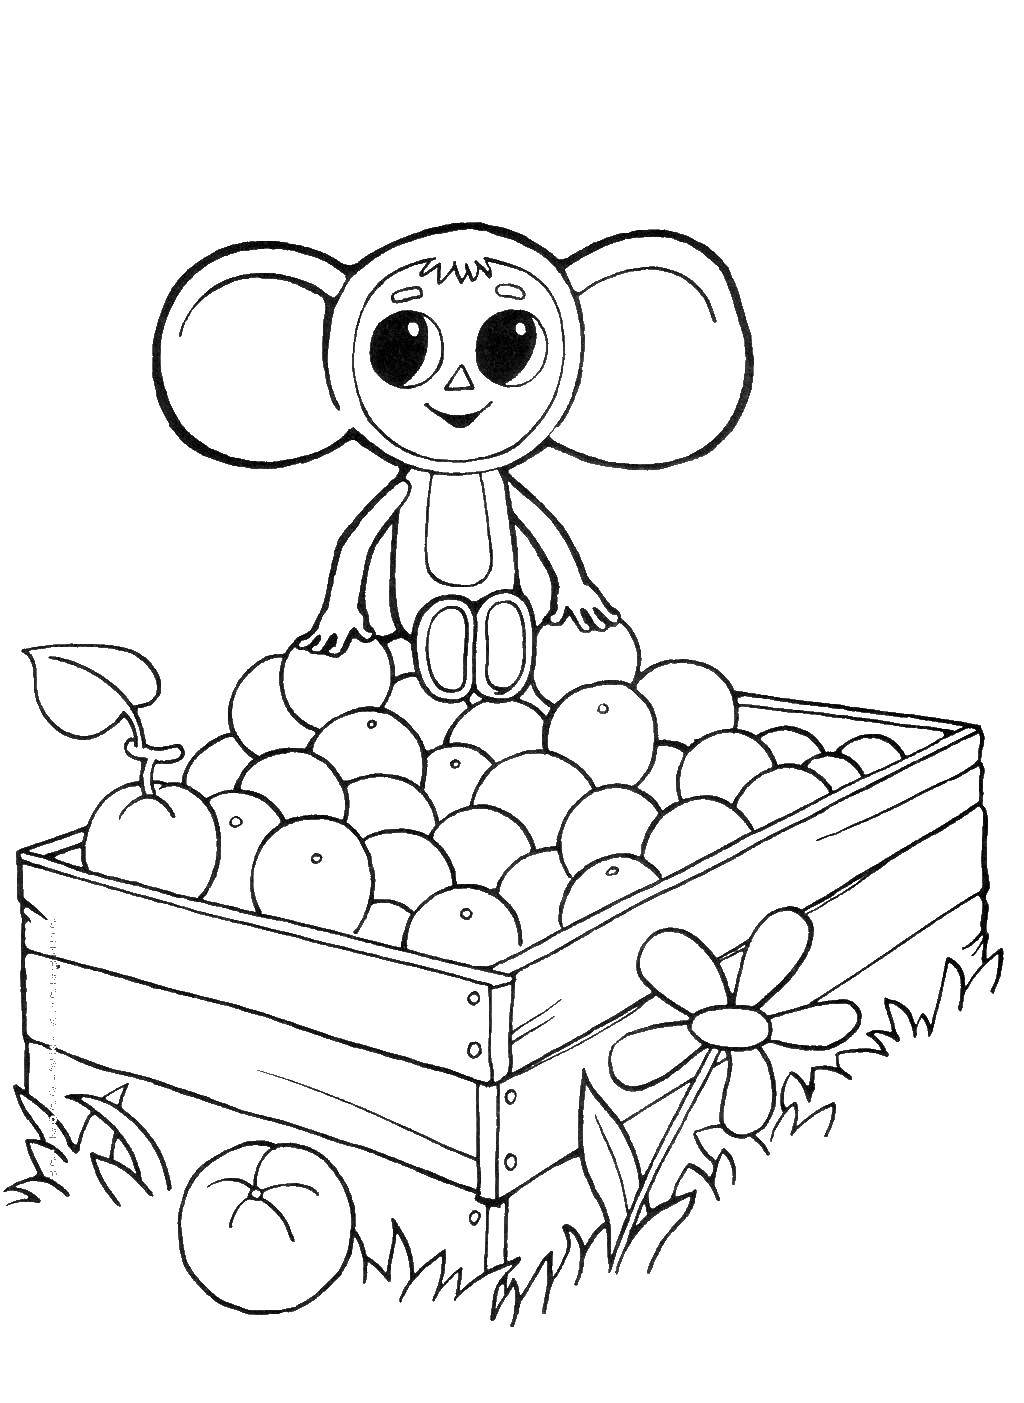 Coloring Cheburashka in the box with apelsinam. Category Cheburashka. Tags:  Cheburashka, Gena.